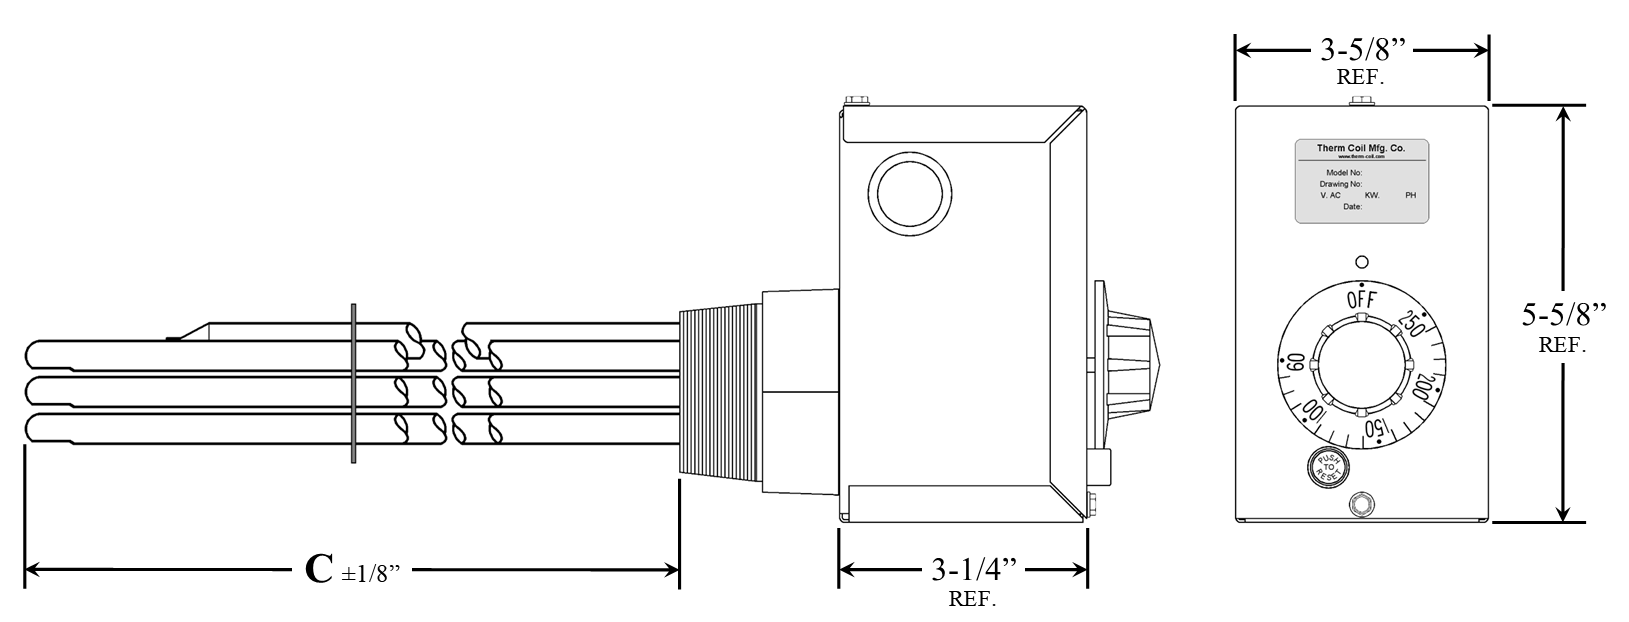 HA-5053 Model: 5000W @ 480V 3-Phase, 13" Immersion Length Regulated 2" NPT Commercial Dishwasher Heating Elements